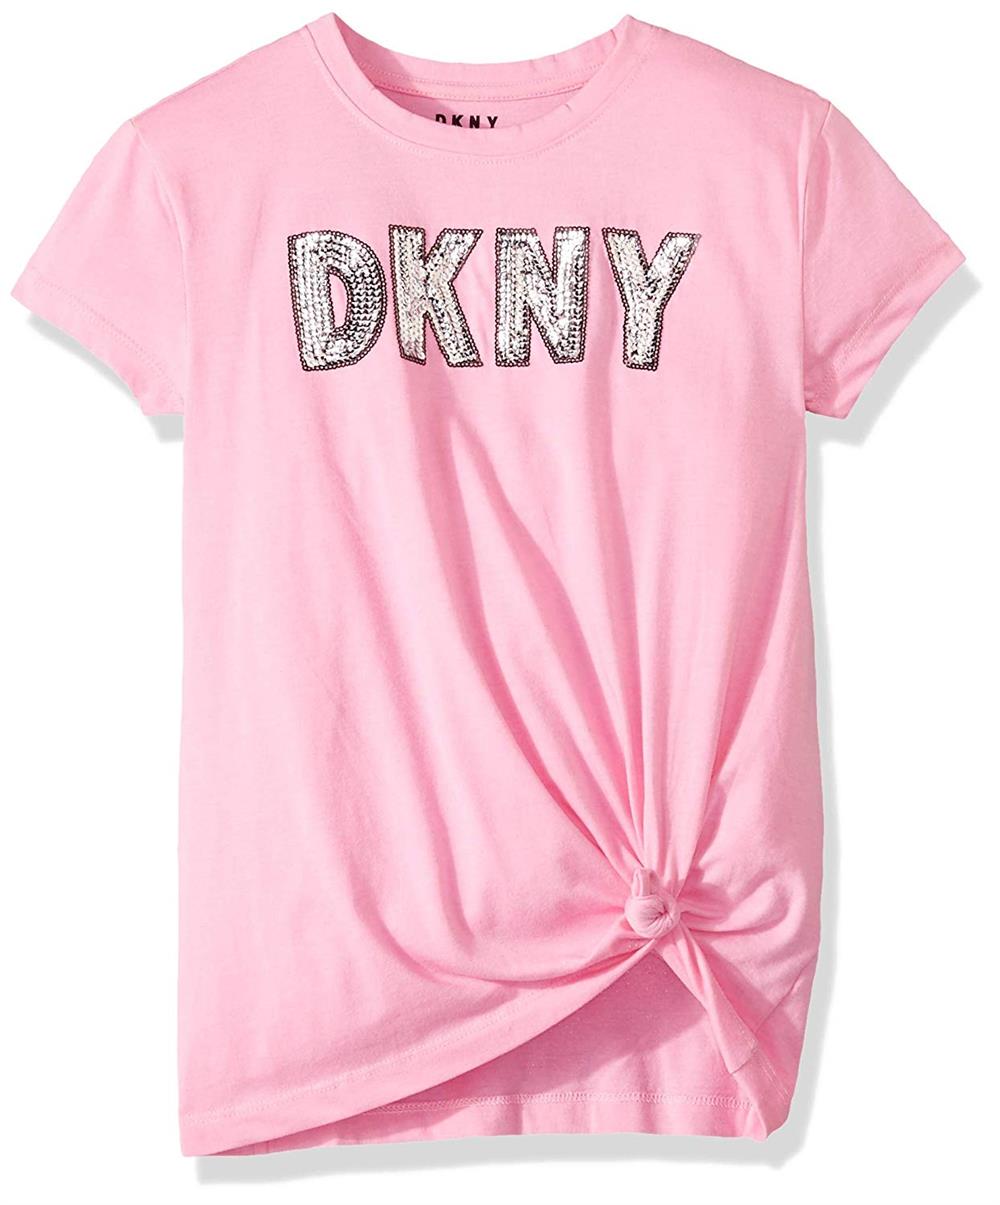 DKNY Girls' 4-6X Little Short Sleeve Printed Fashion T-Shirt - 4 / Pink